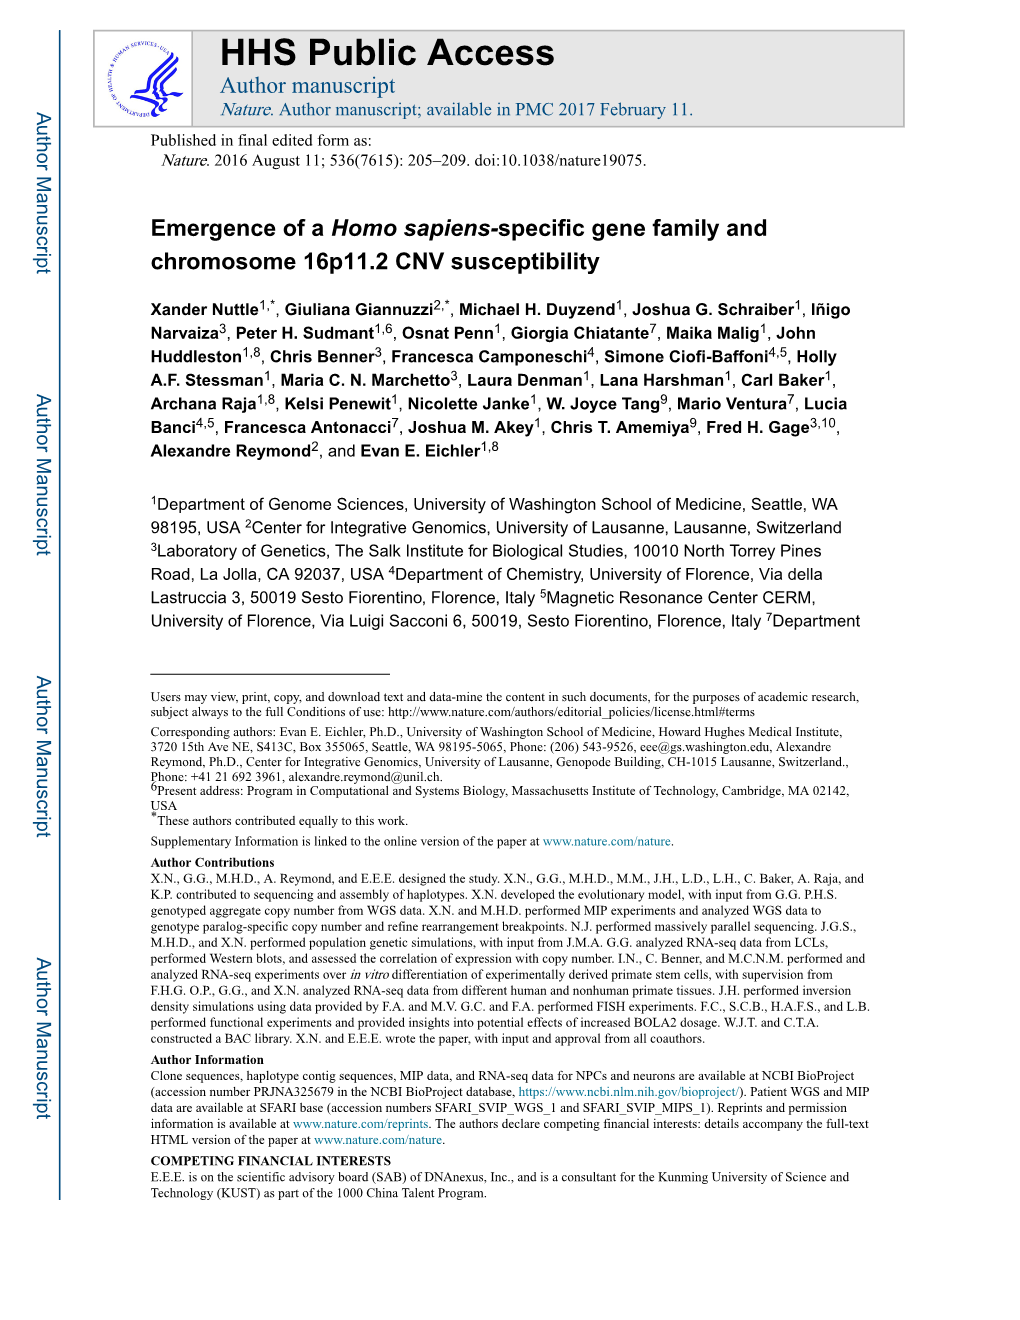 Emergence of a Homo Sapiens-Specific Gene Family and Chromosome 16P11.2 CNV Susceptibility